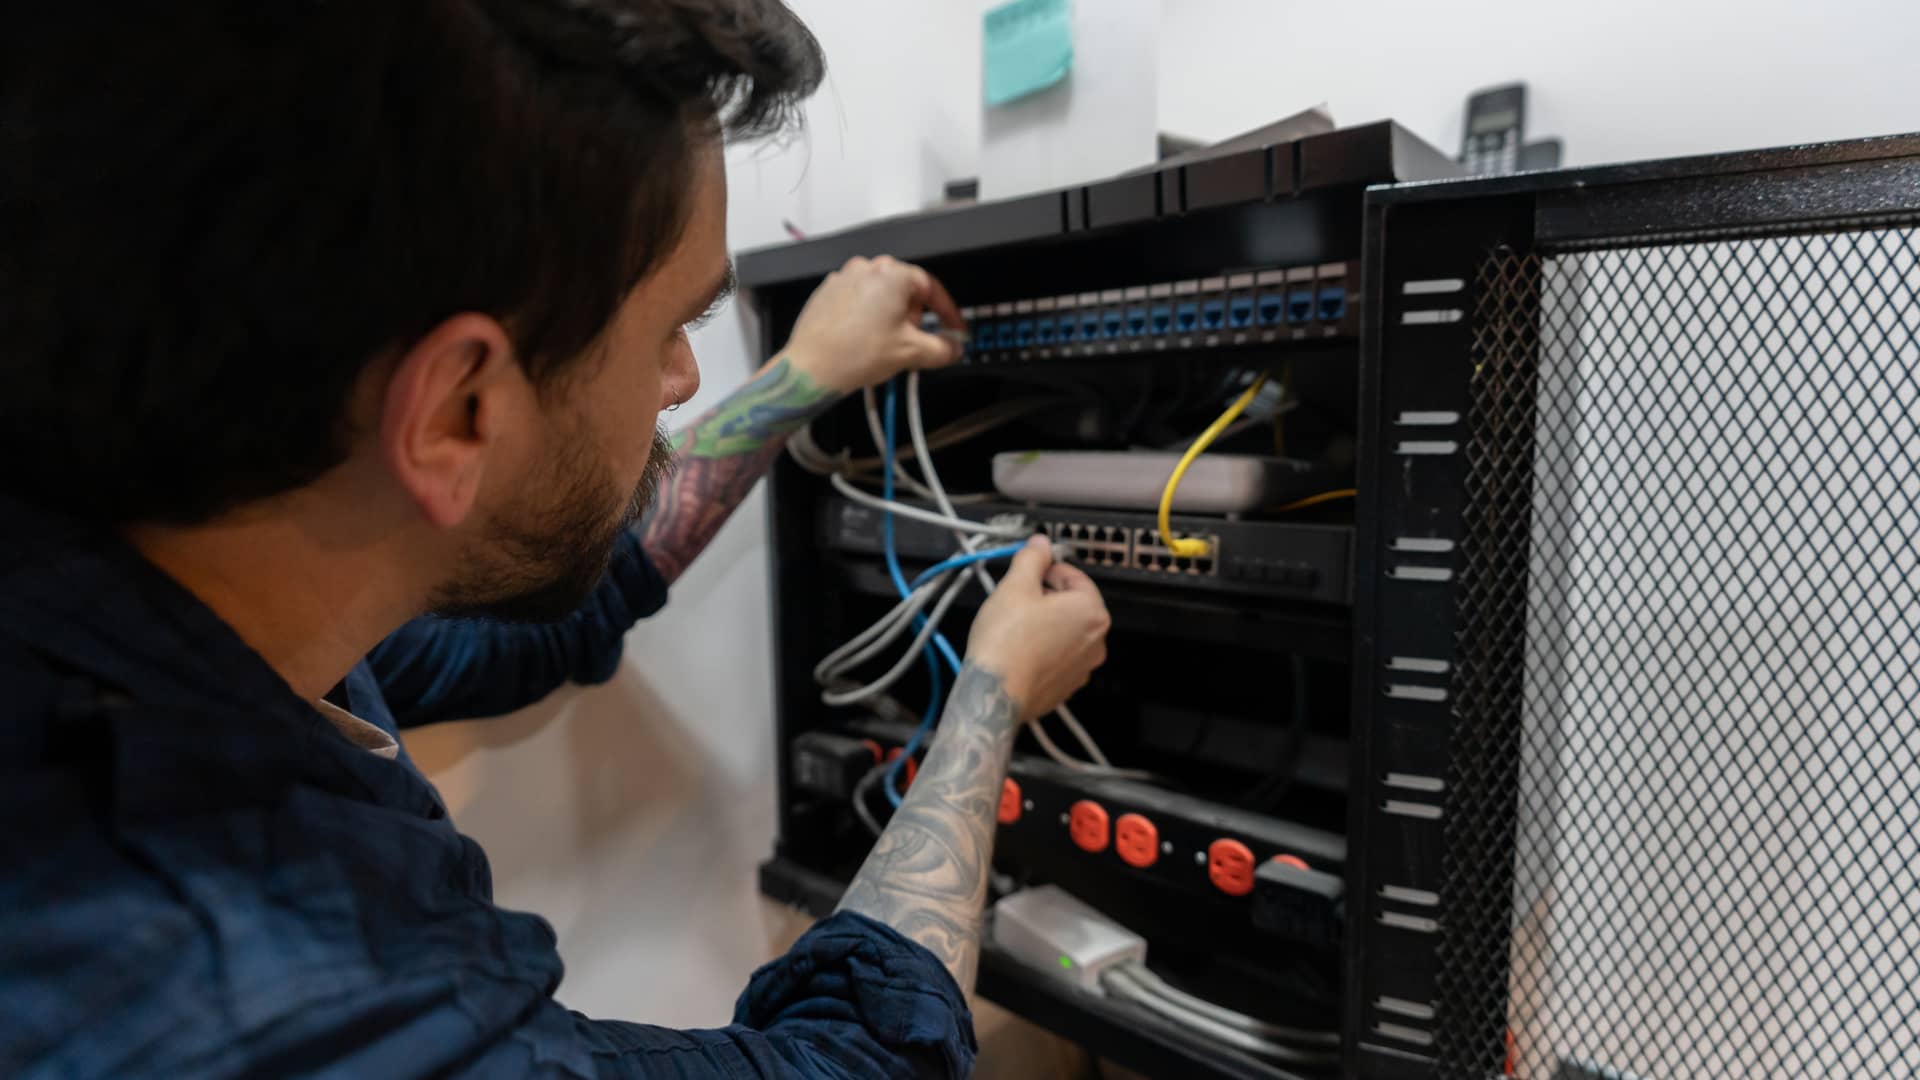 Técnico de compañia axtel terminando de configurar servidor para cliente con internet experto